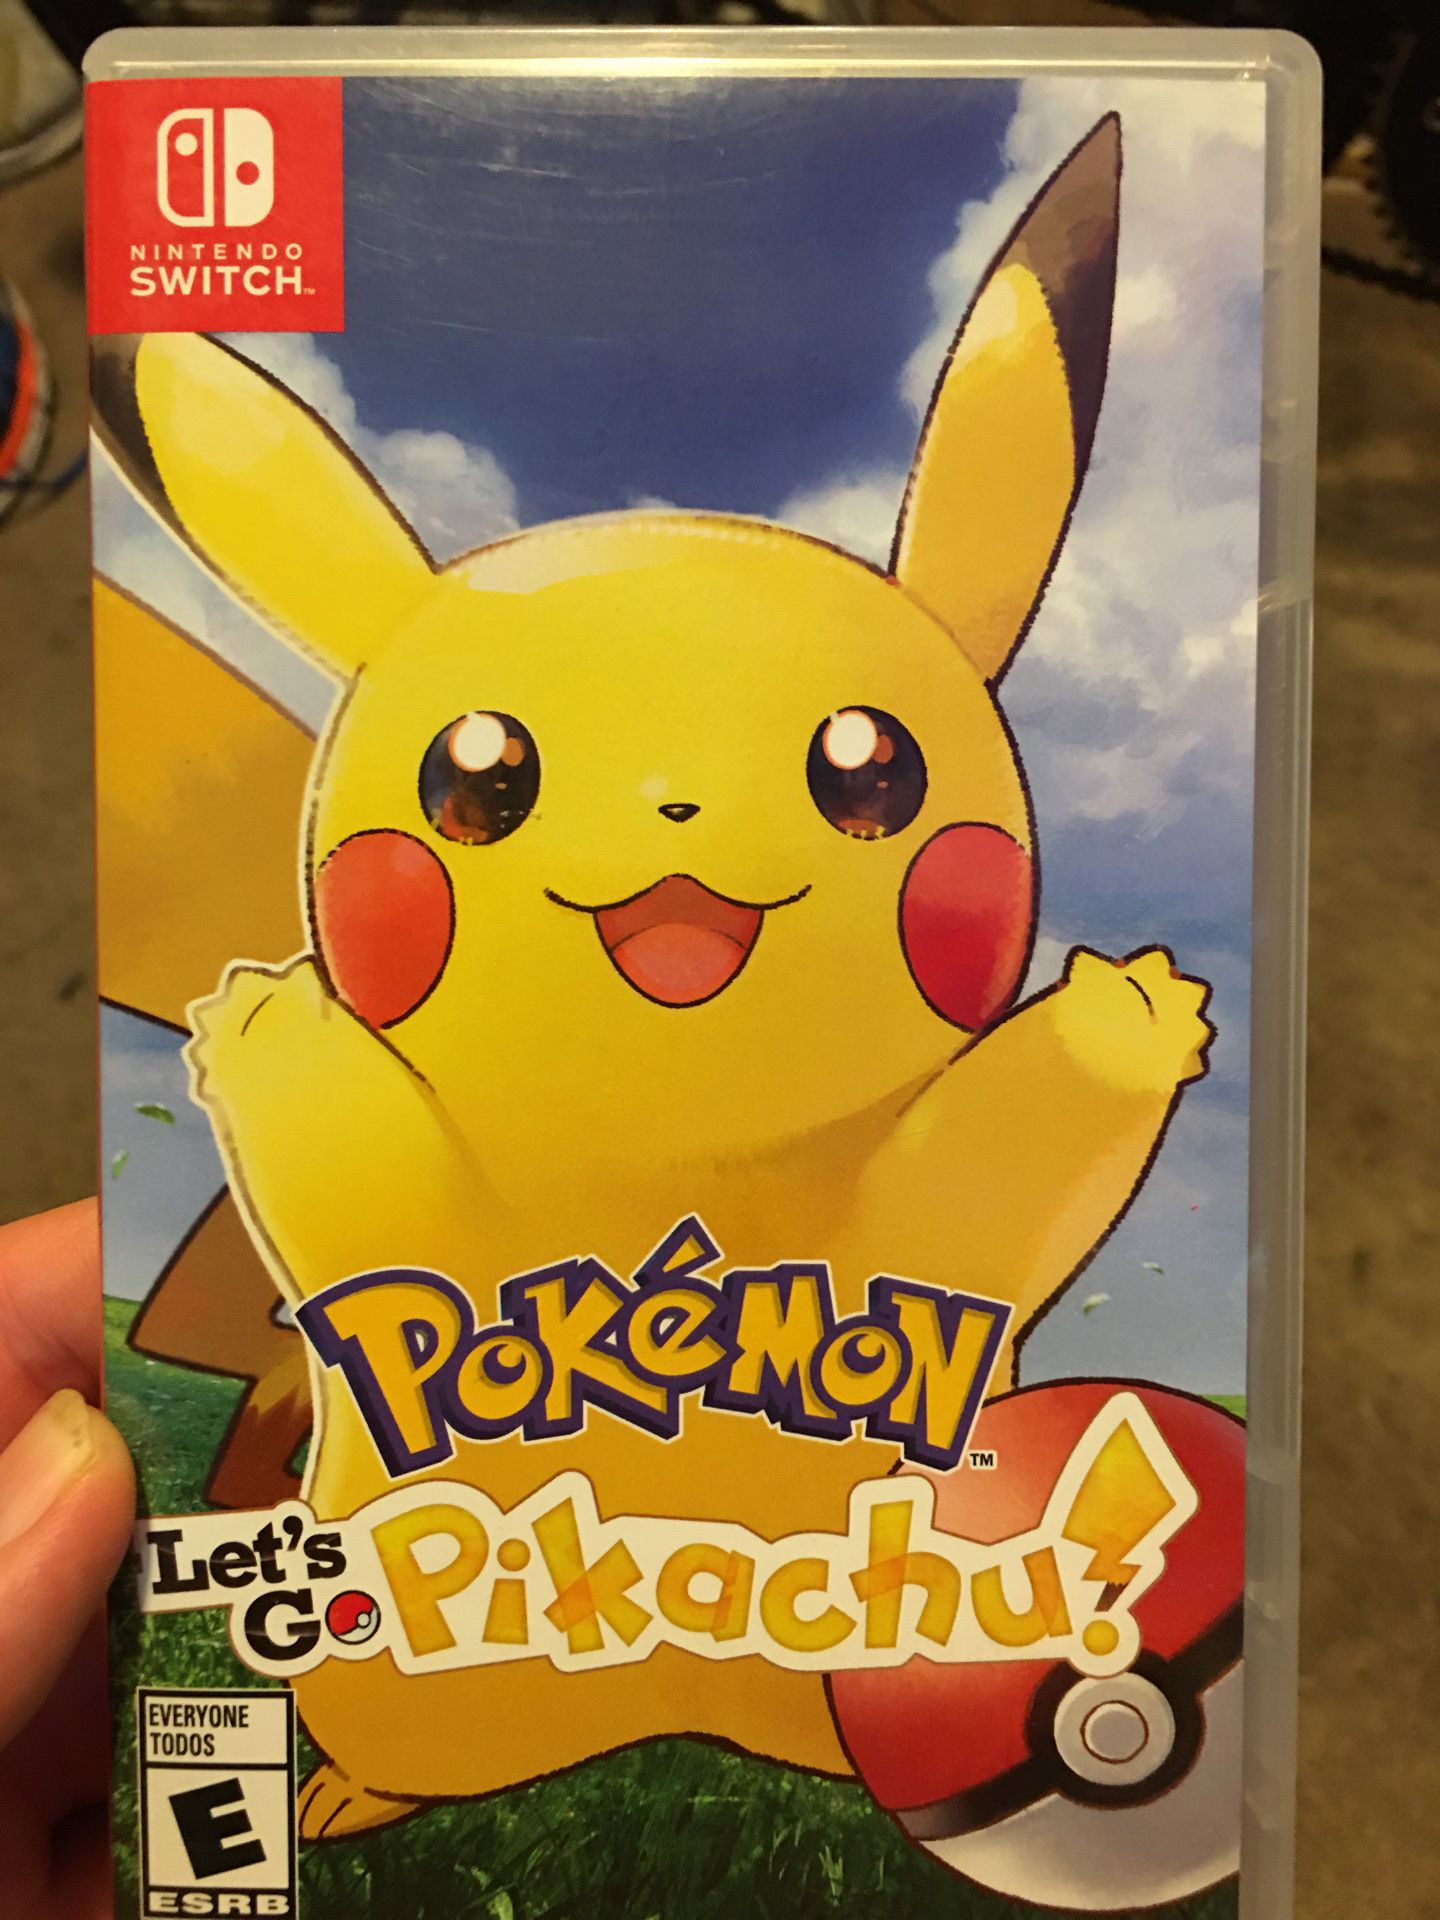 Pokémon let’s go Pikachu